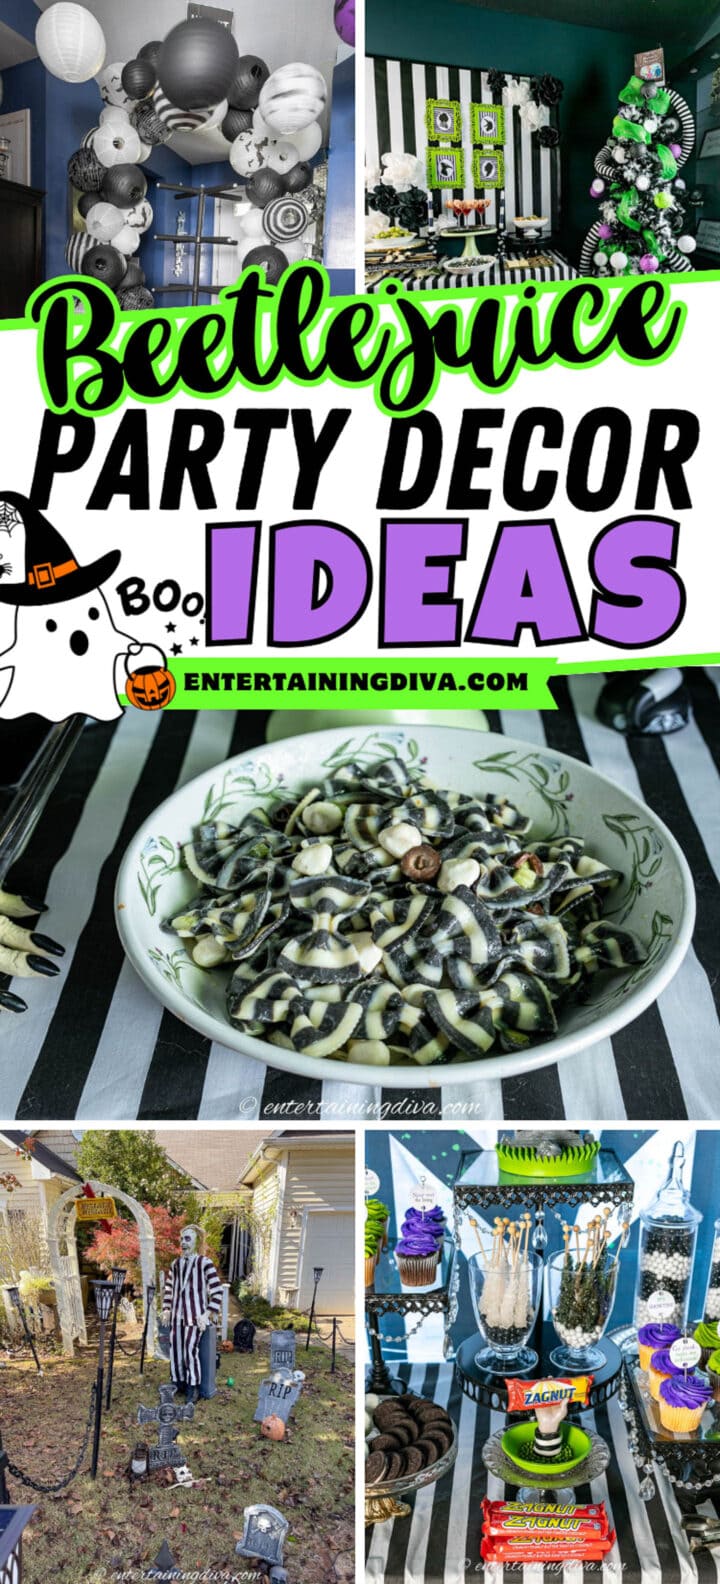 Beetlejuice themed party décor ideas.